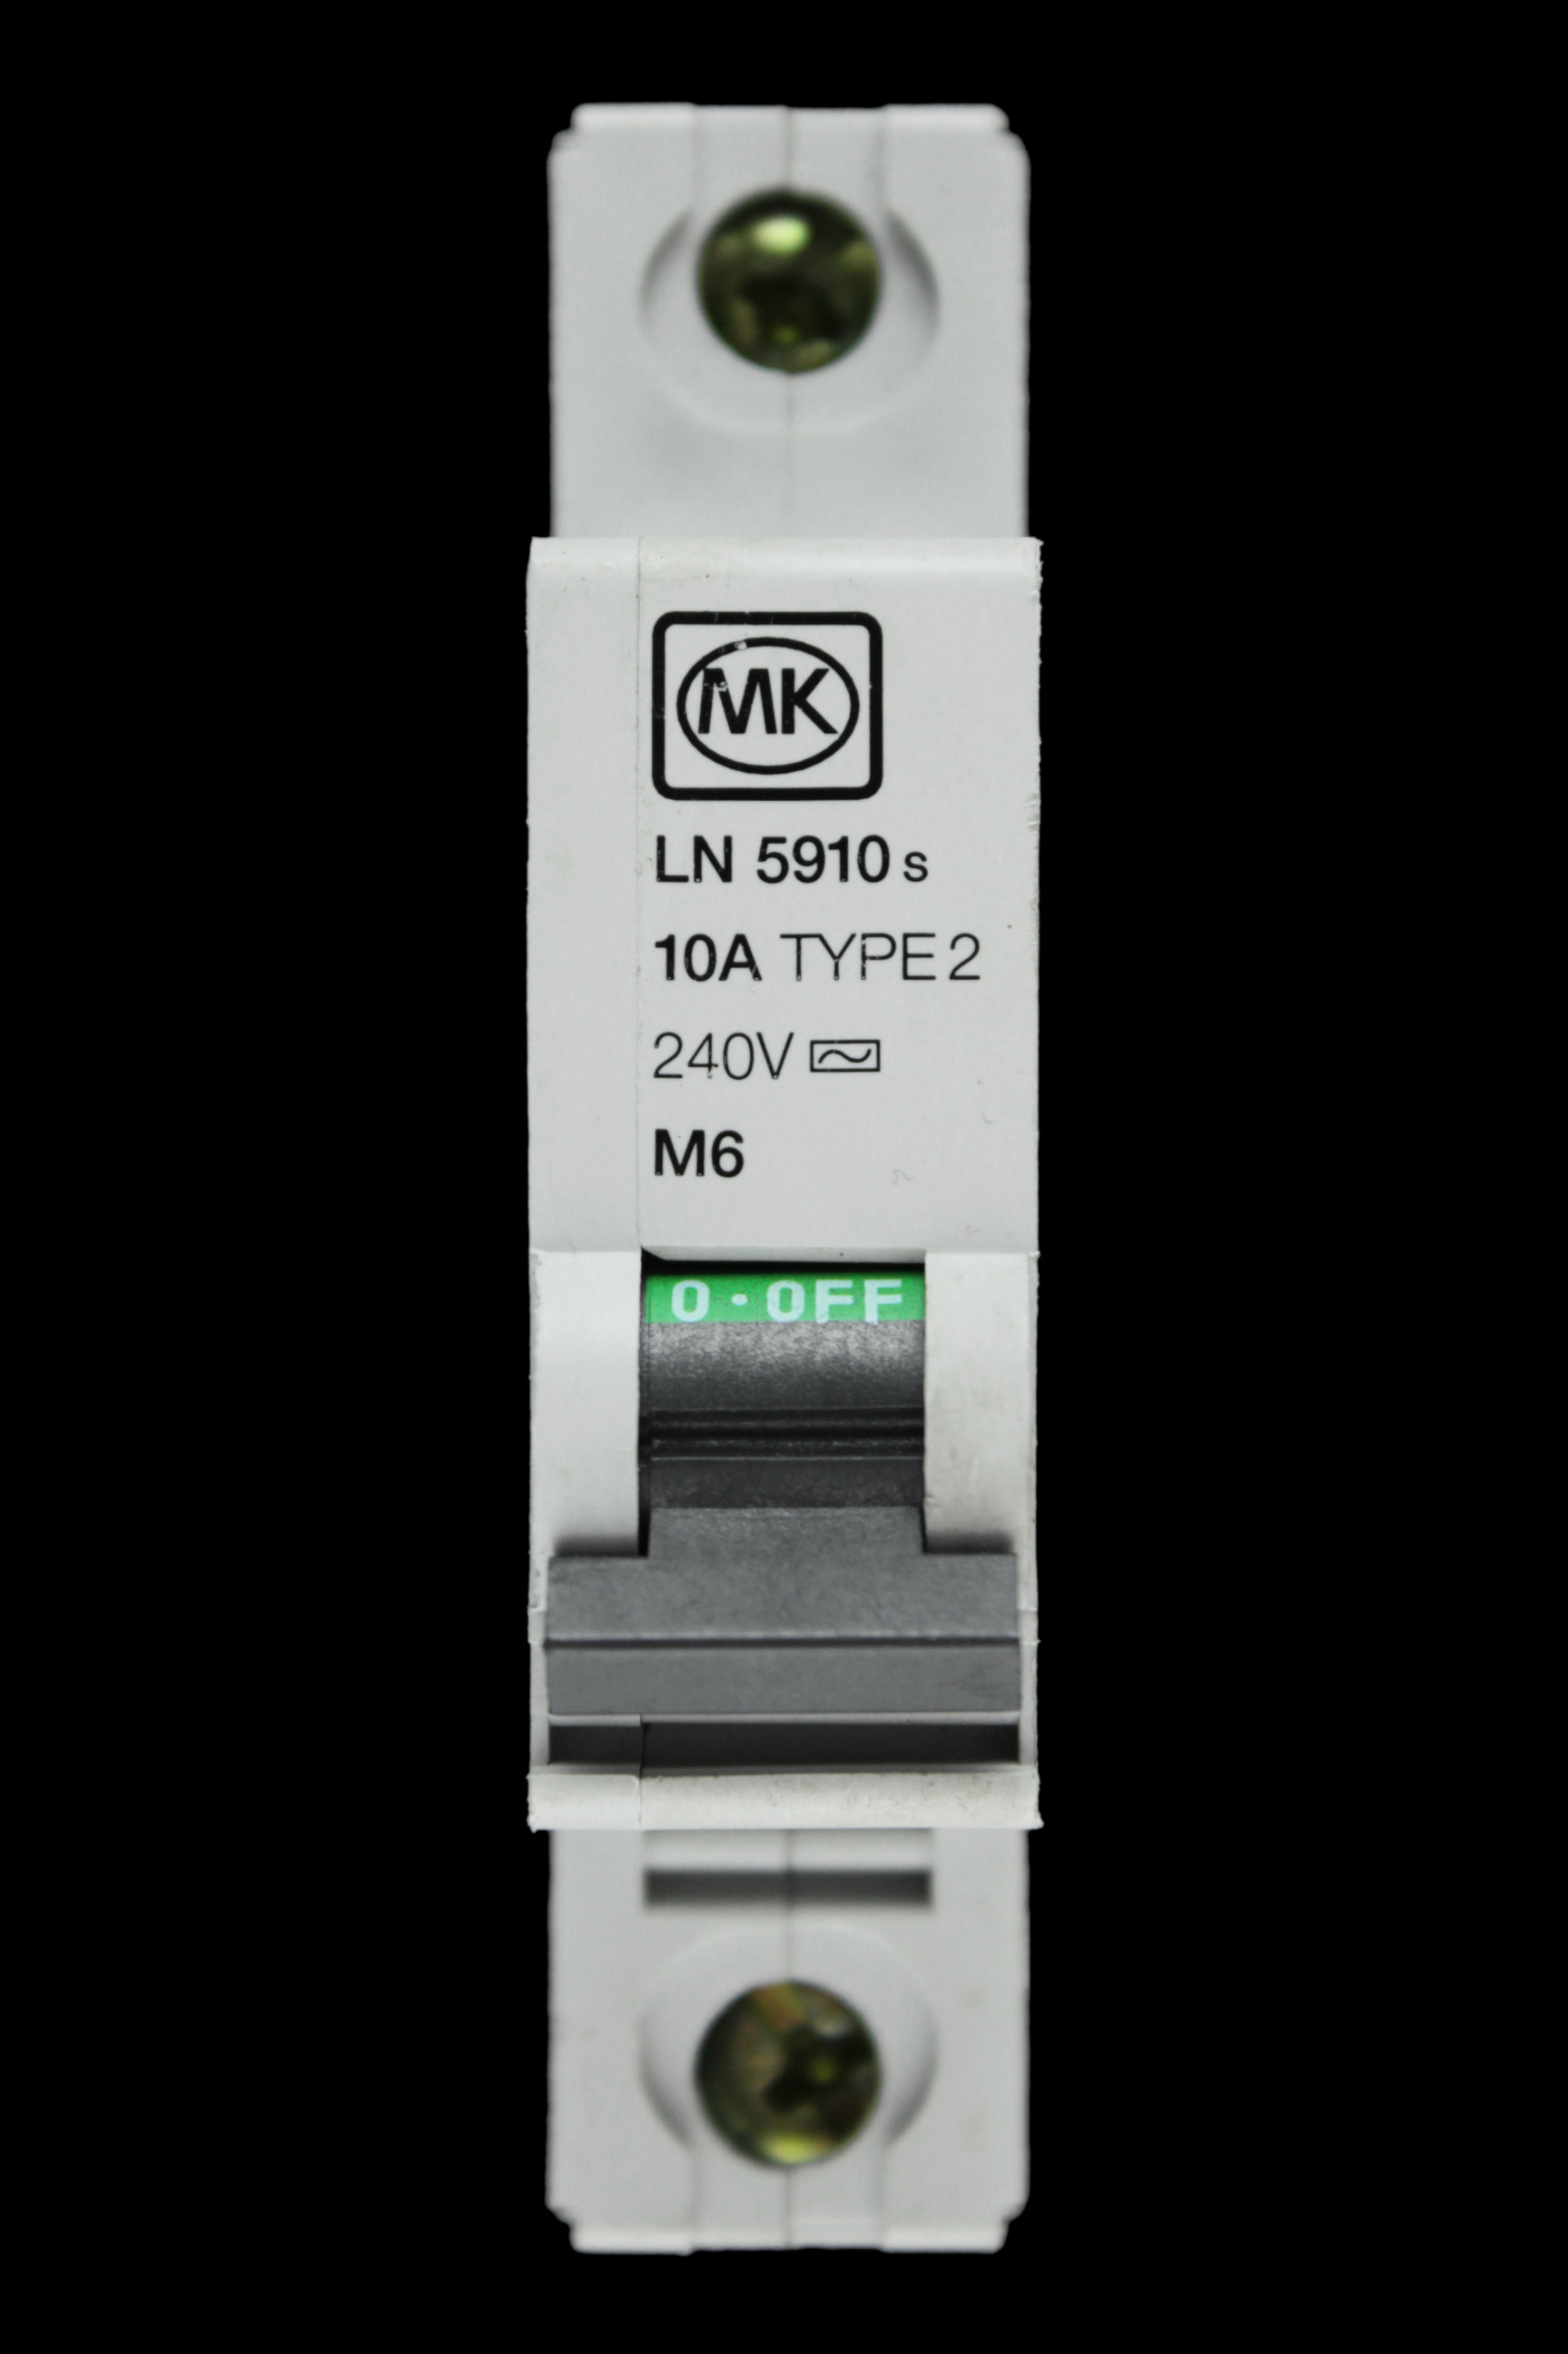 MK 10 AMP TYPE 2 M6 MCB CIRCUIT BREAKER LN 5910s SENTRY